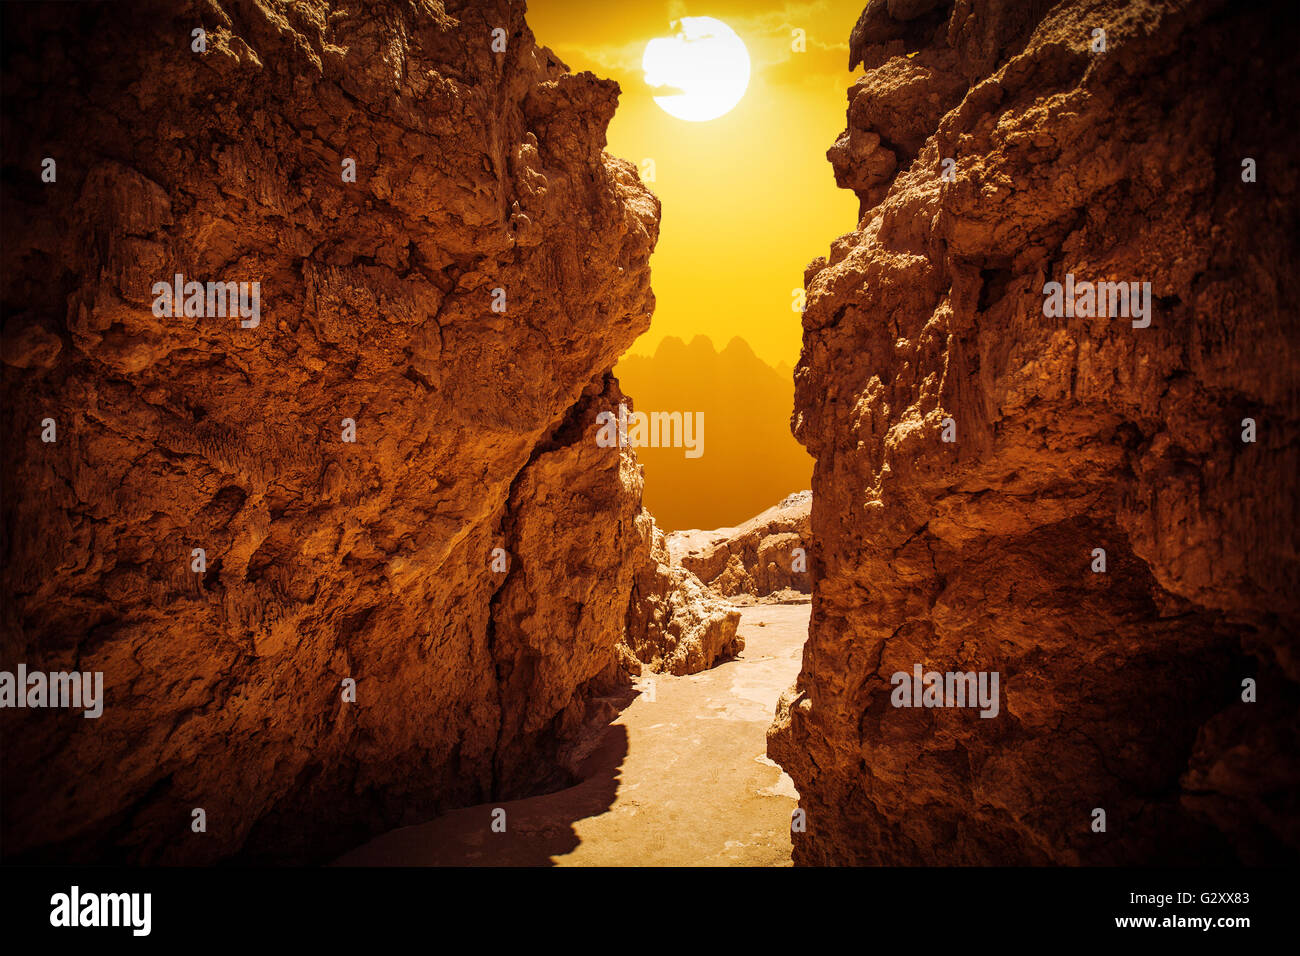 Rock formations of the Atacama desert, Chile Stock Photo